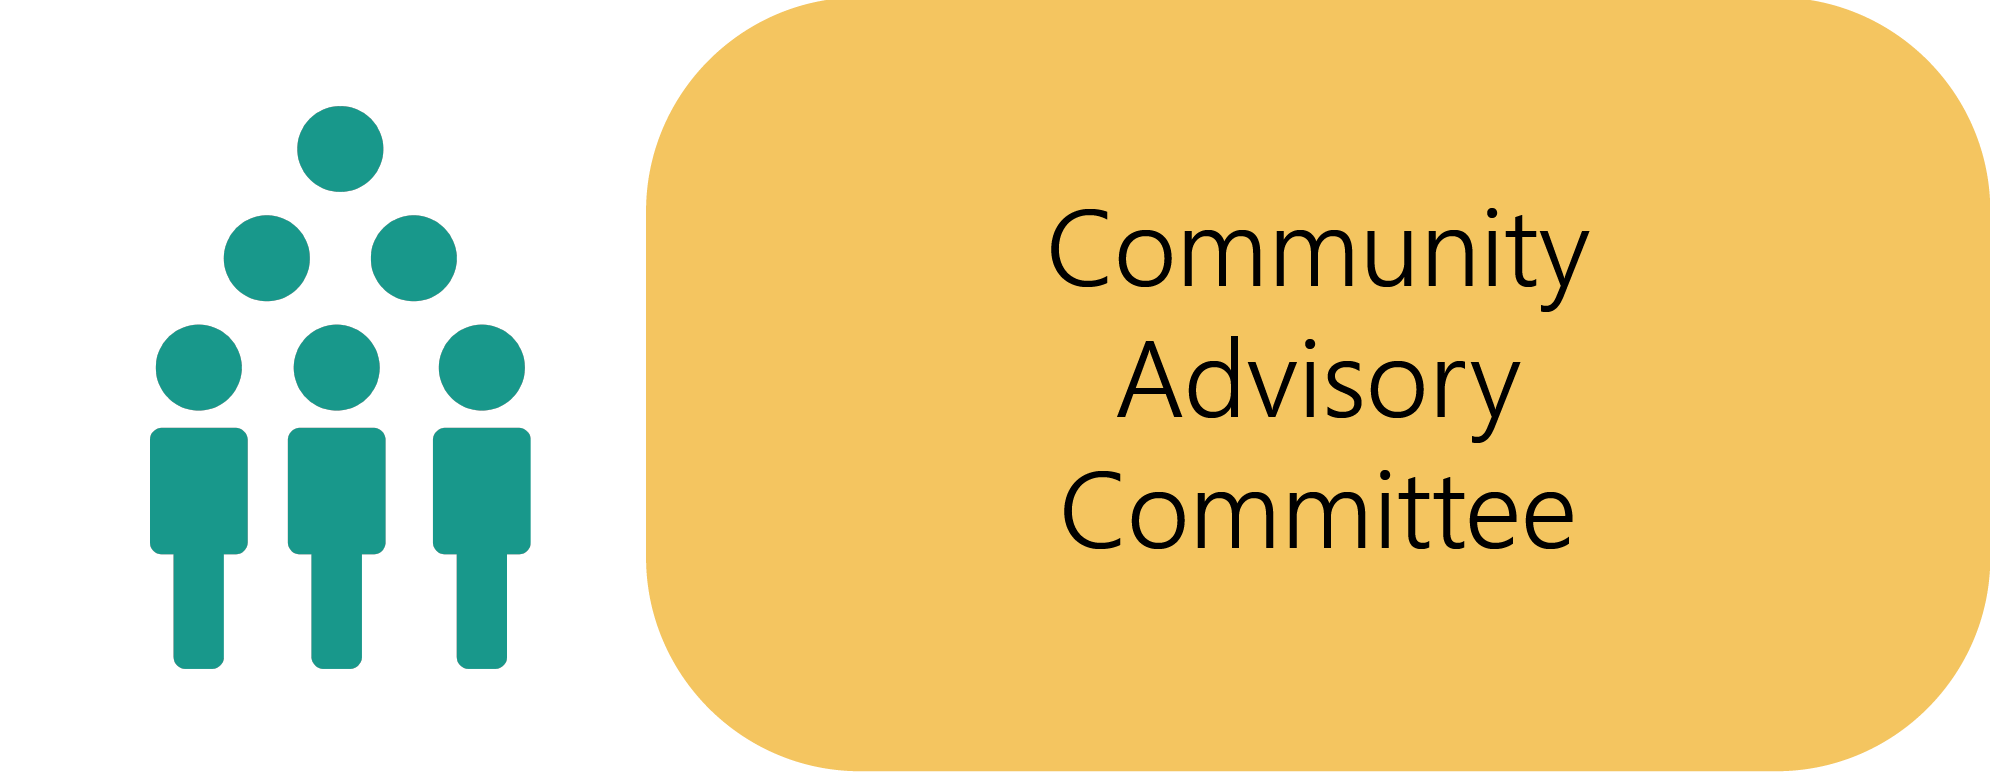 AMATS Community Advisory Committee logo_people